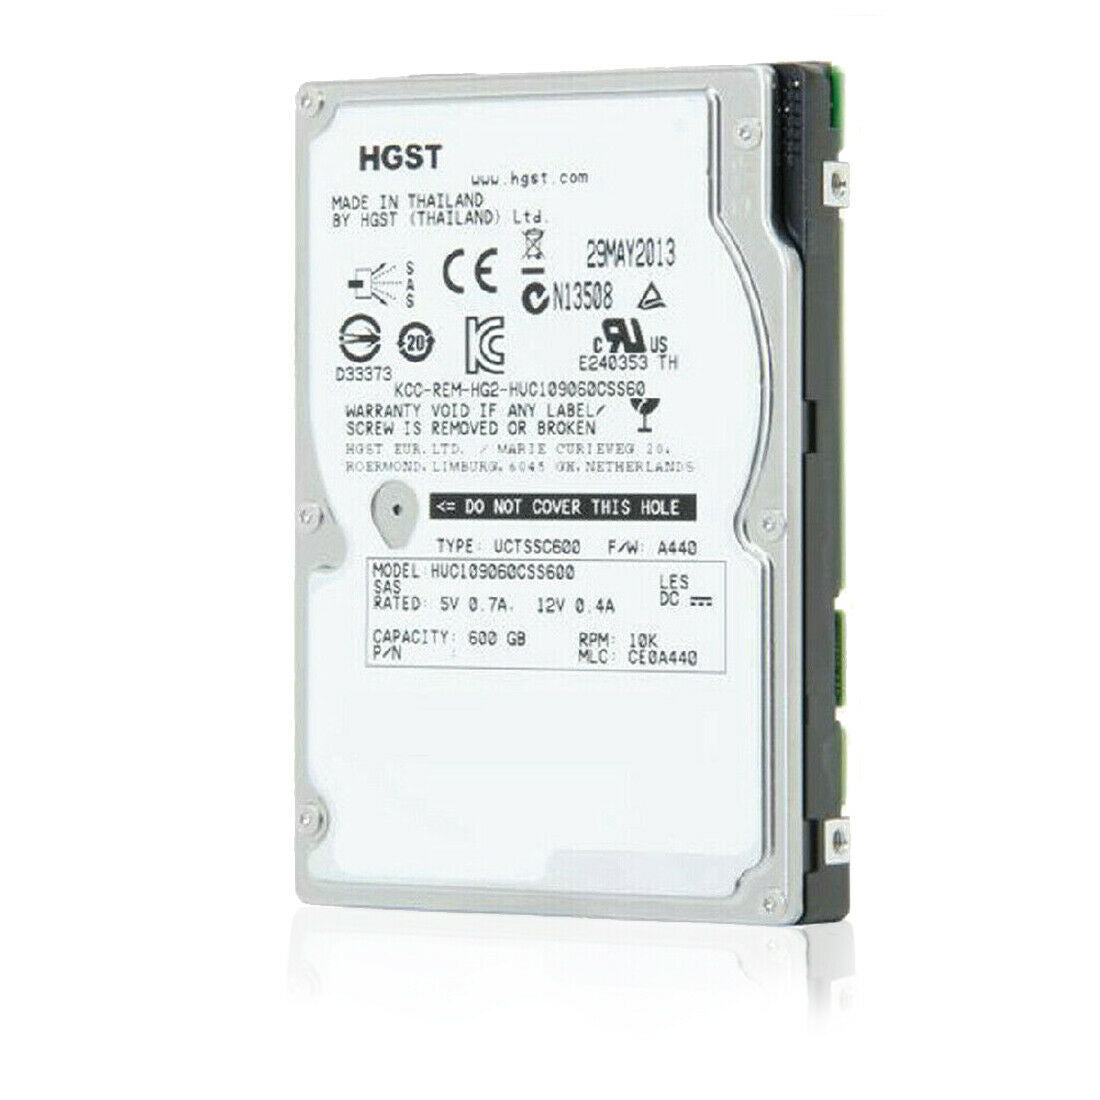 HGST 2.5" (SAS) Internal Hard Drive Server 600GB 10Krpm 0B26040, HUC109060CSS600